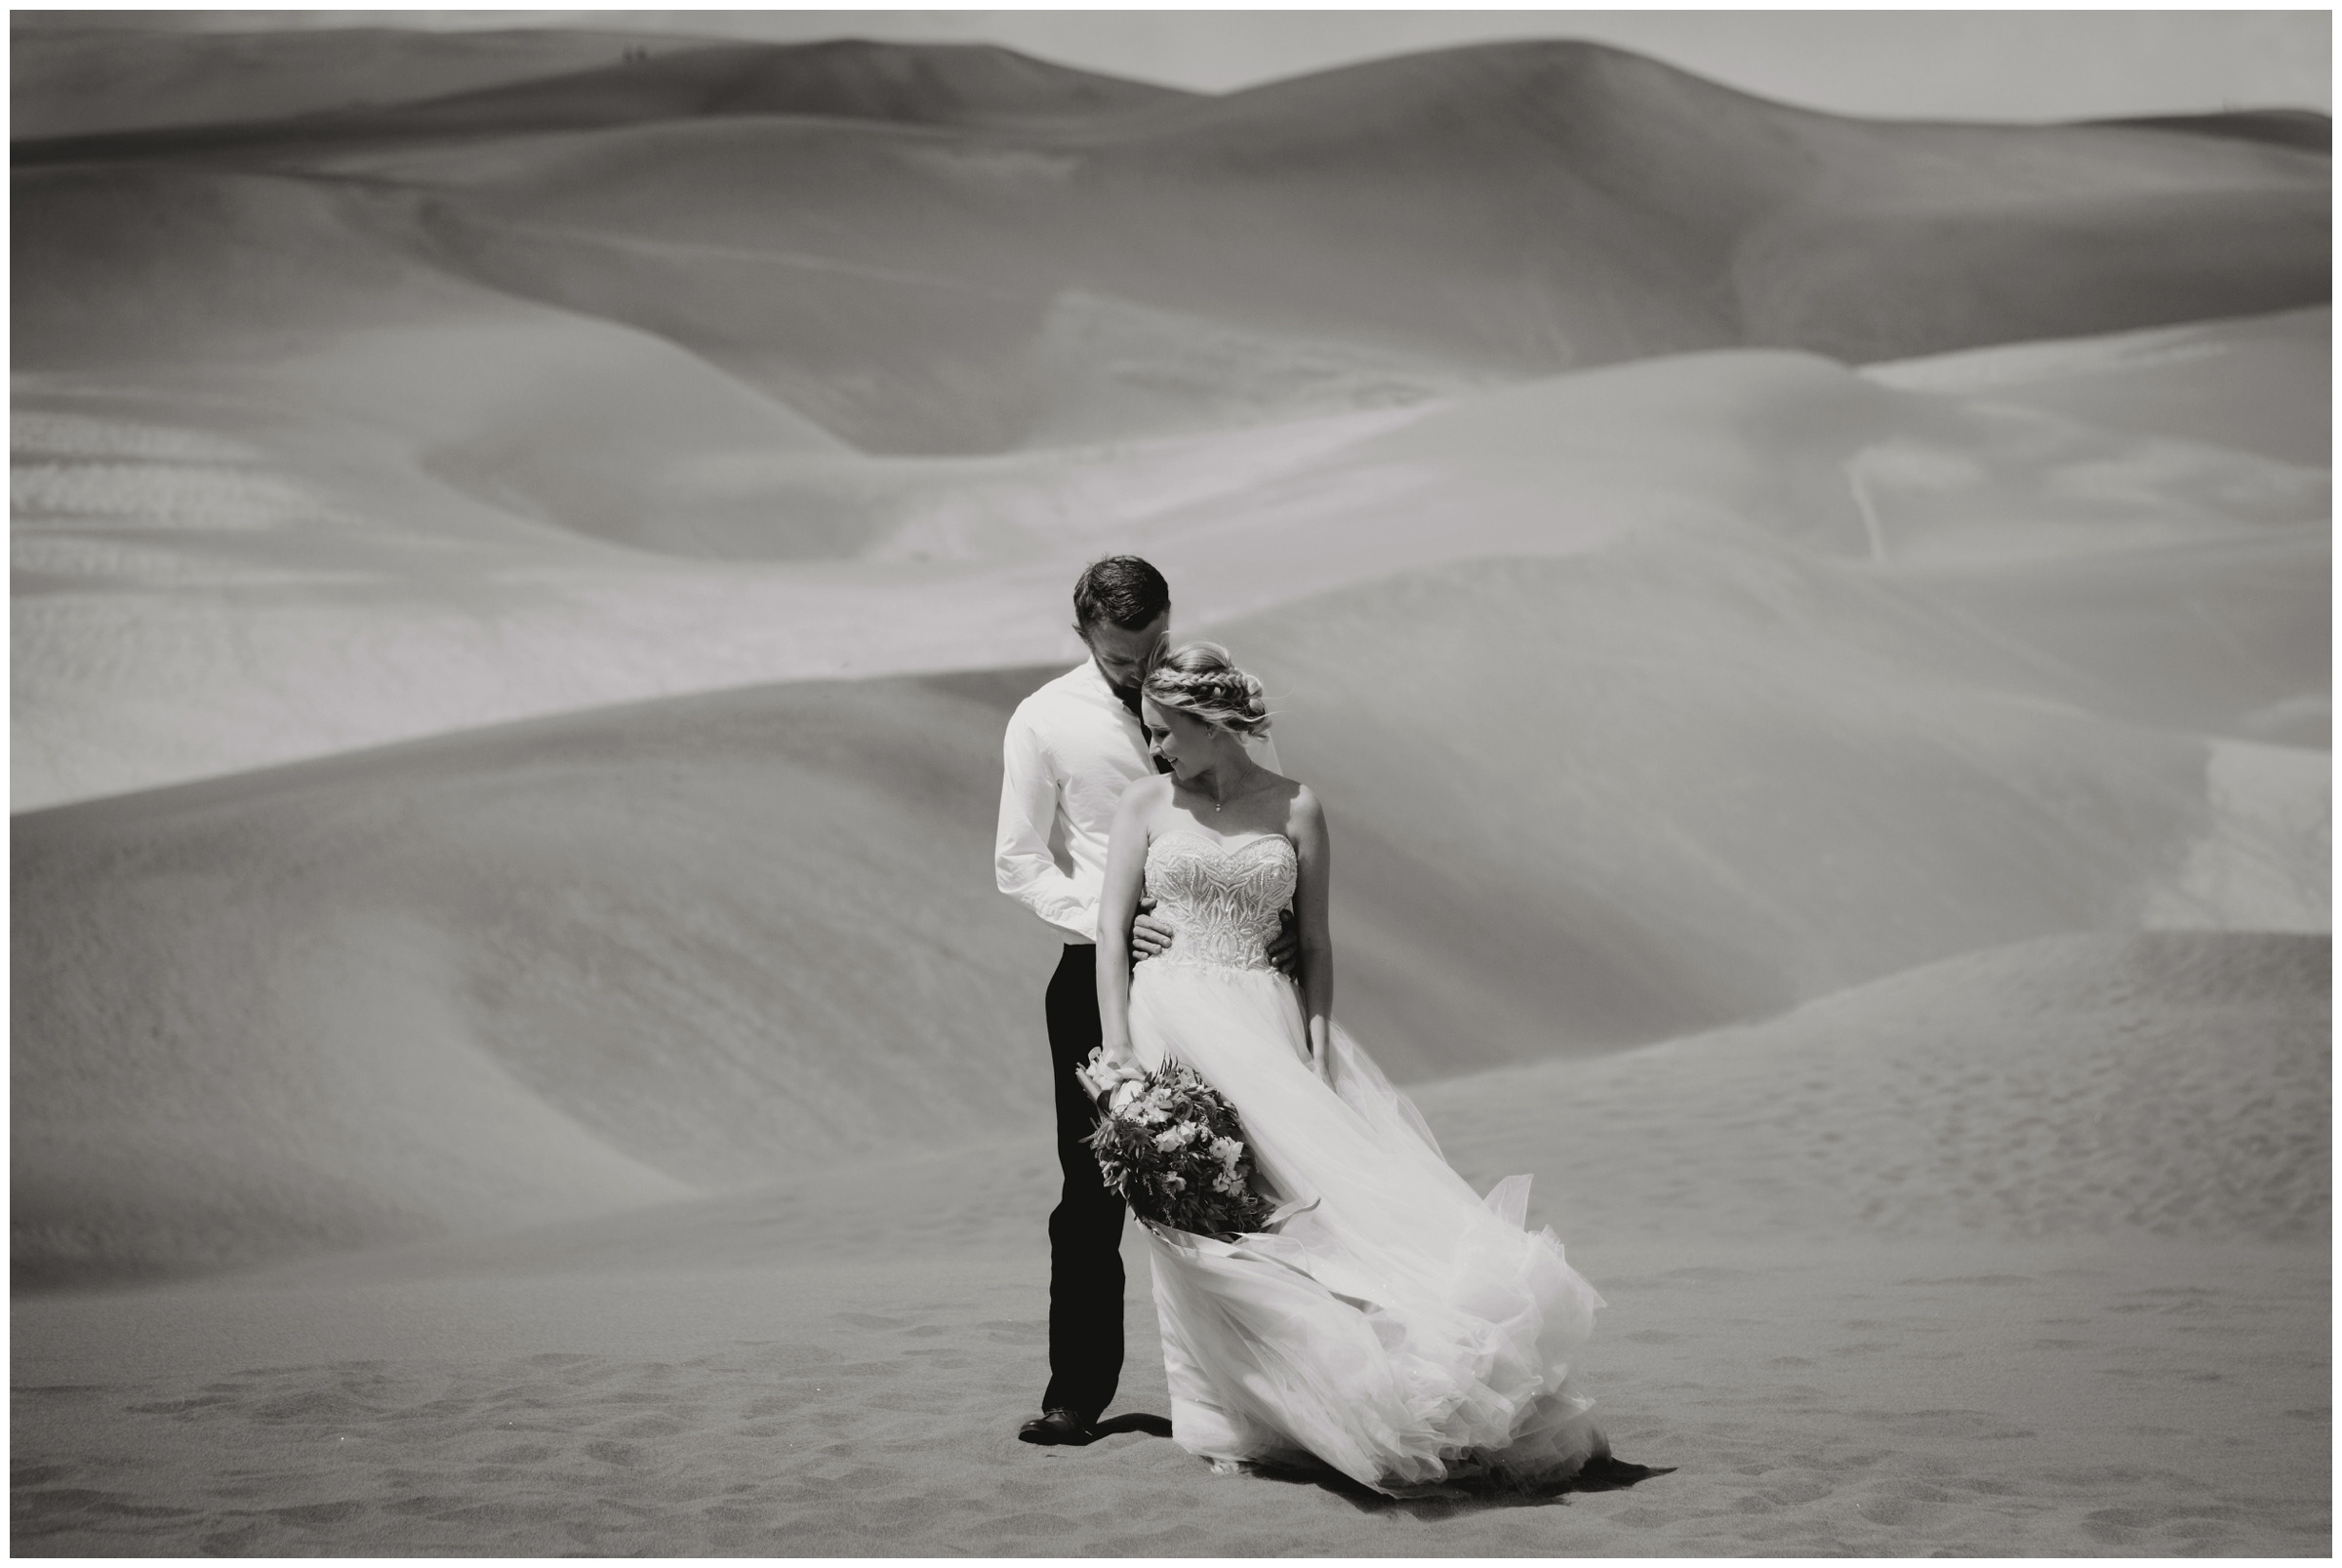 Great Sand Dunes Colorado elopement inspiration by adventure wedding photographer Plum Pretty Photography